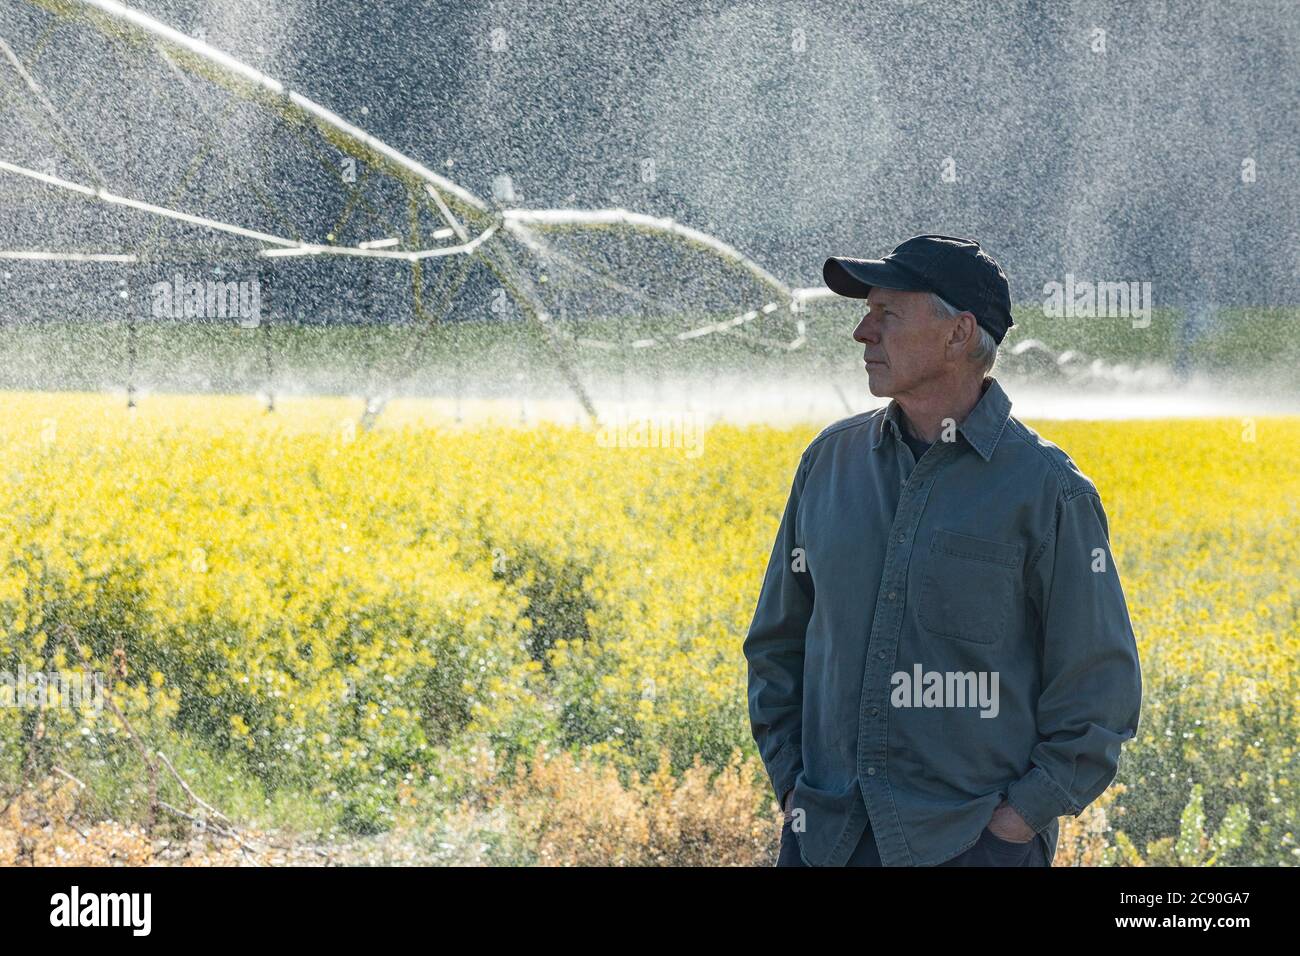 USA, Idaho, Sun Valley, Farmer standing in mustard field during irrigation Stock Photo